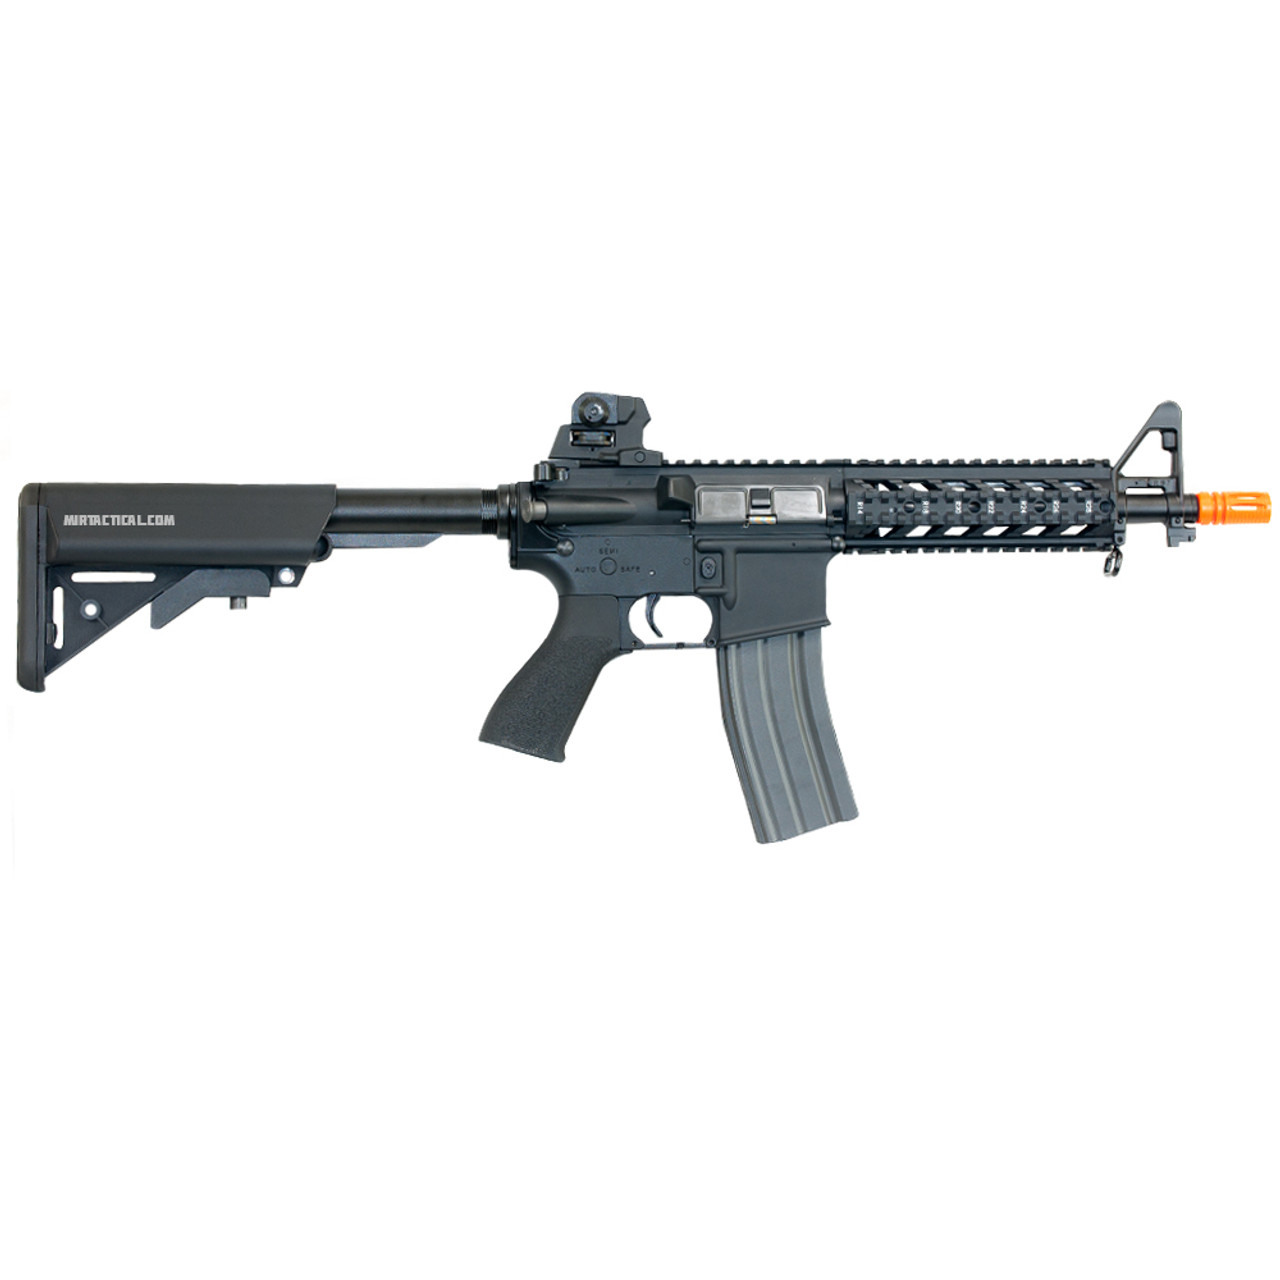 G&G CM16 RAIDER M4/M16 AIRSOFT SBR AEG - BLACK low price of $127.49